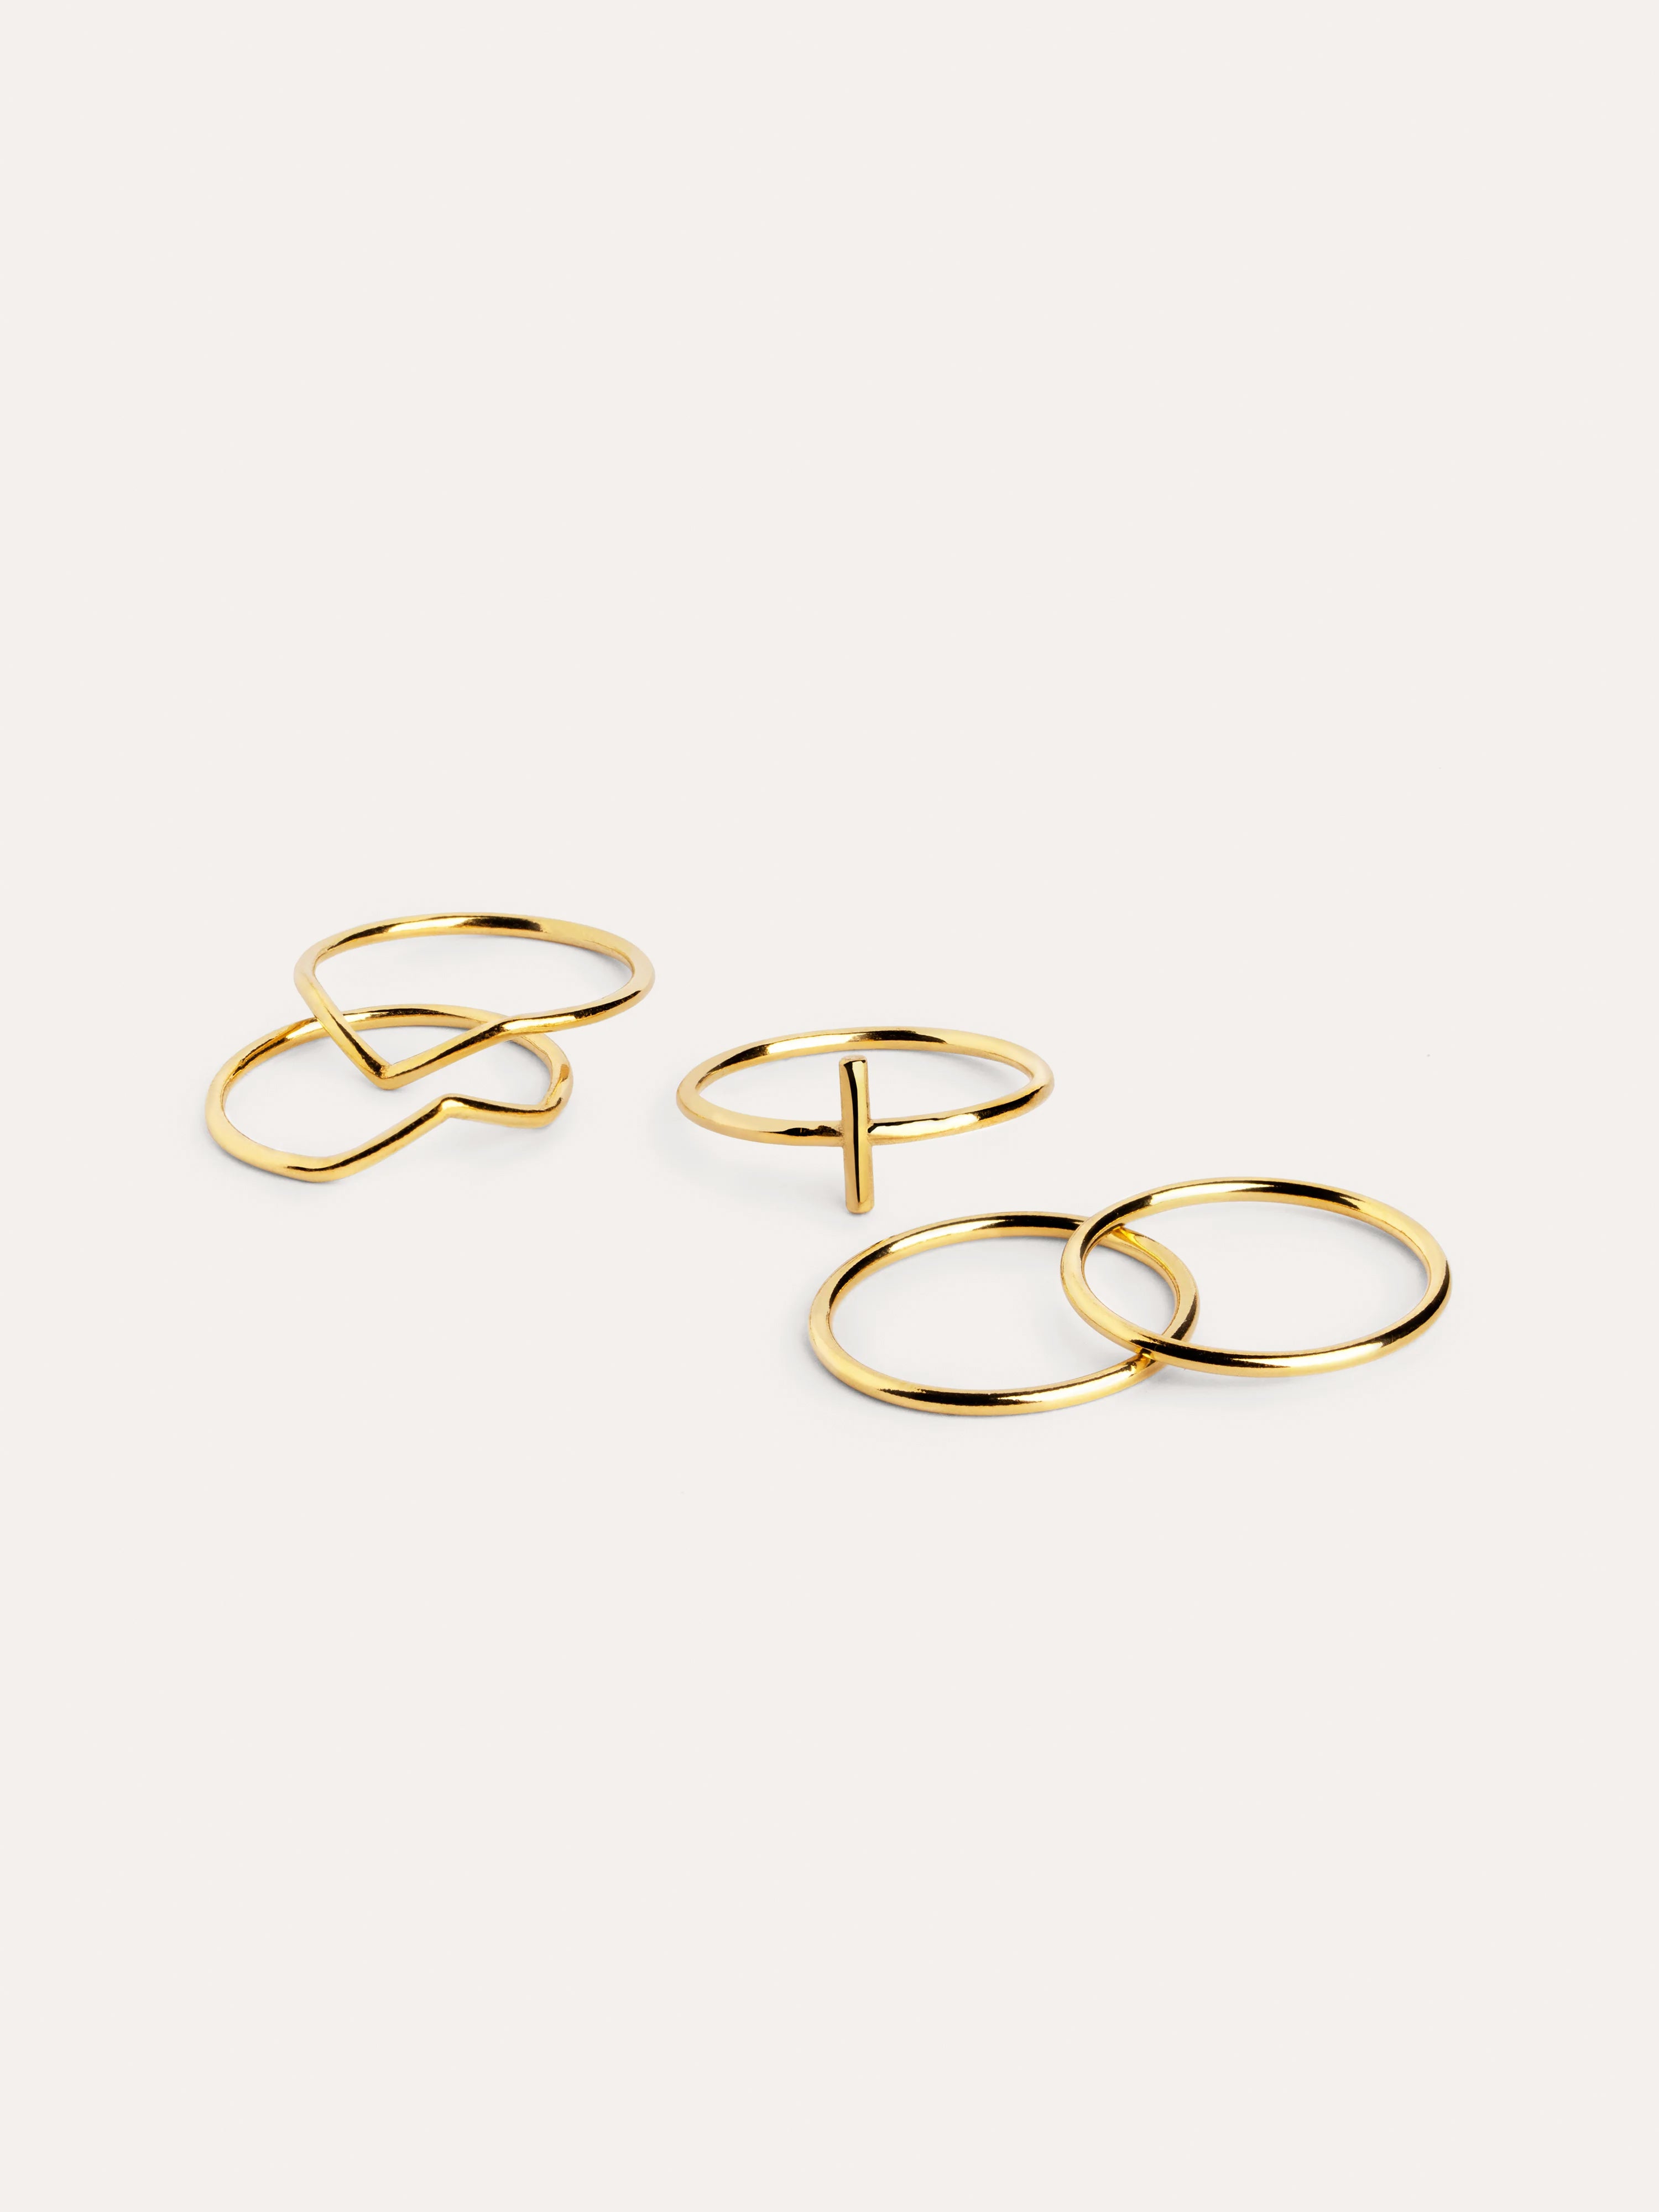 Nefertiti 5 Gold Rings Pack